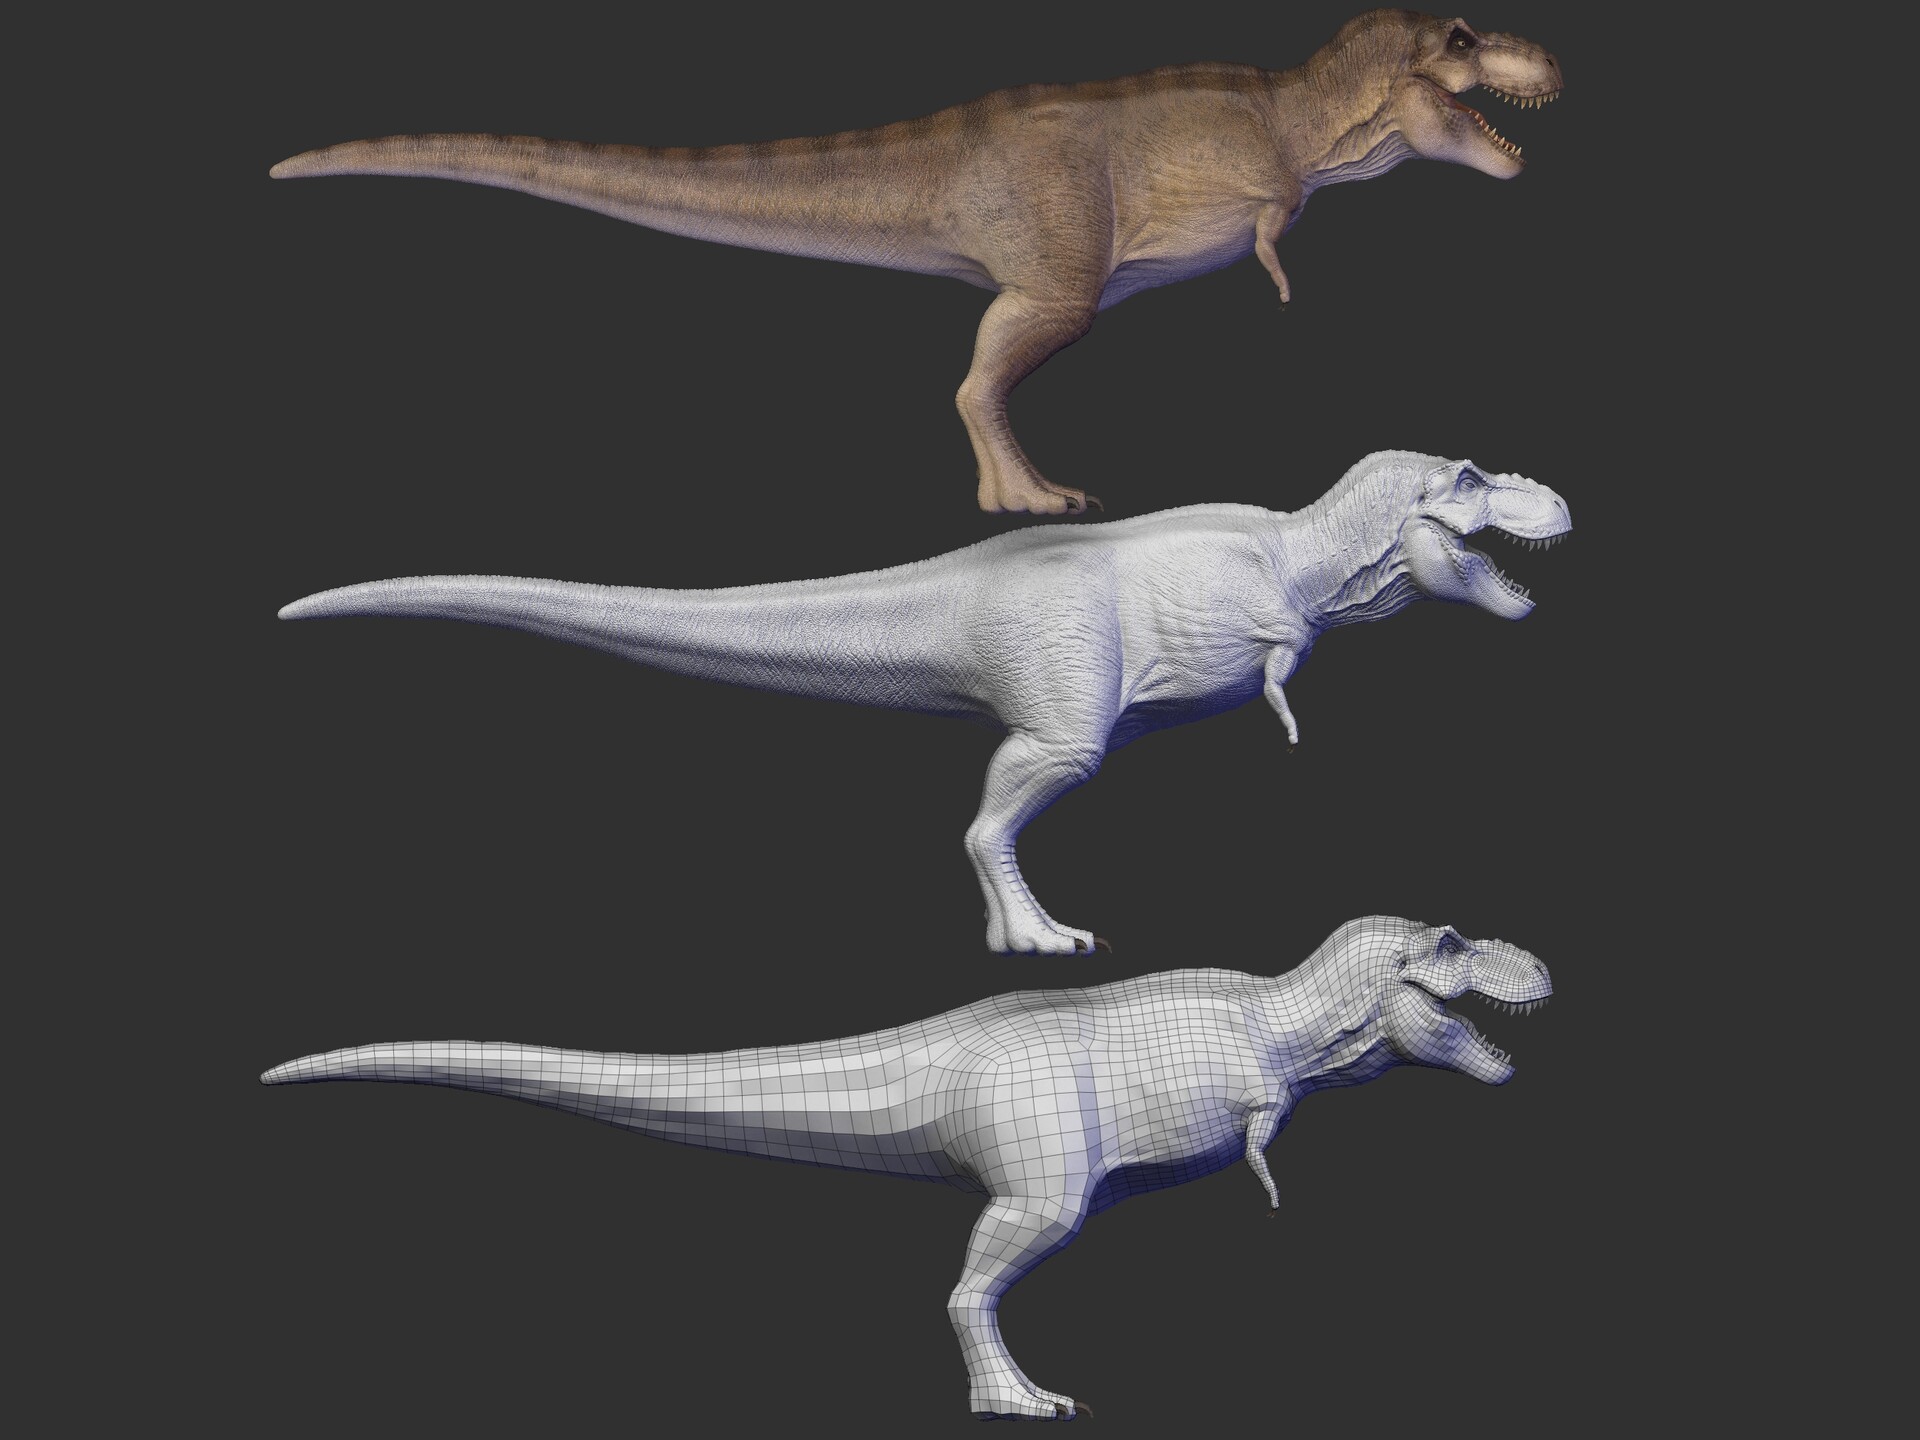 Tyrannosaurus rex rexy from Jurassic park and world (Fanart), David Rosa